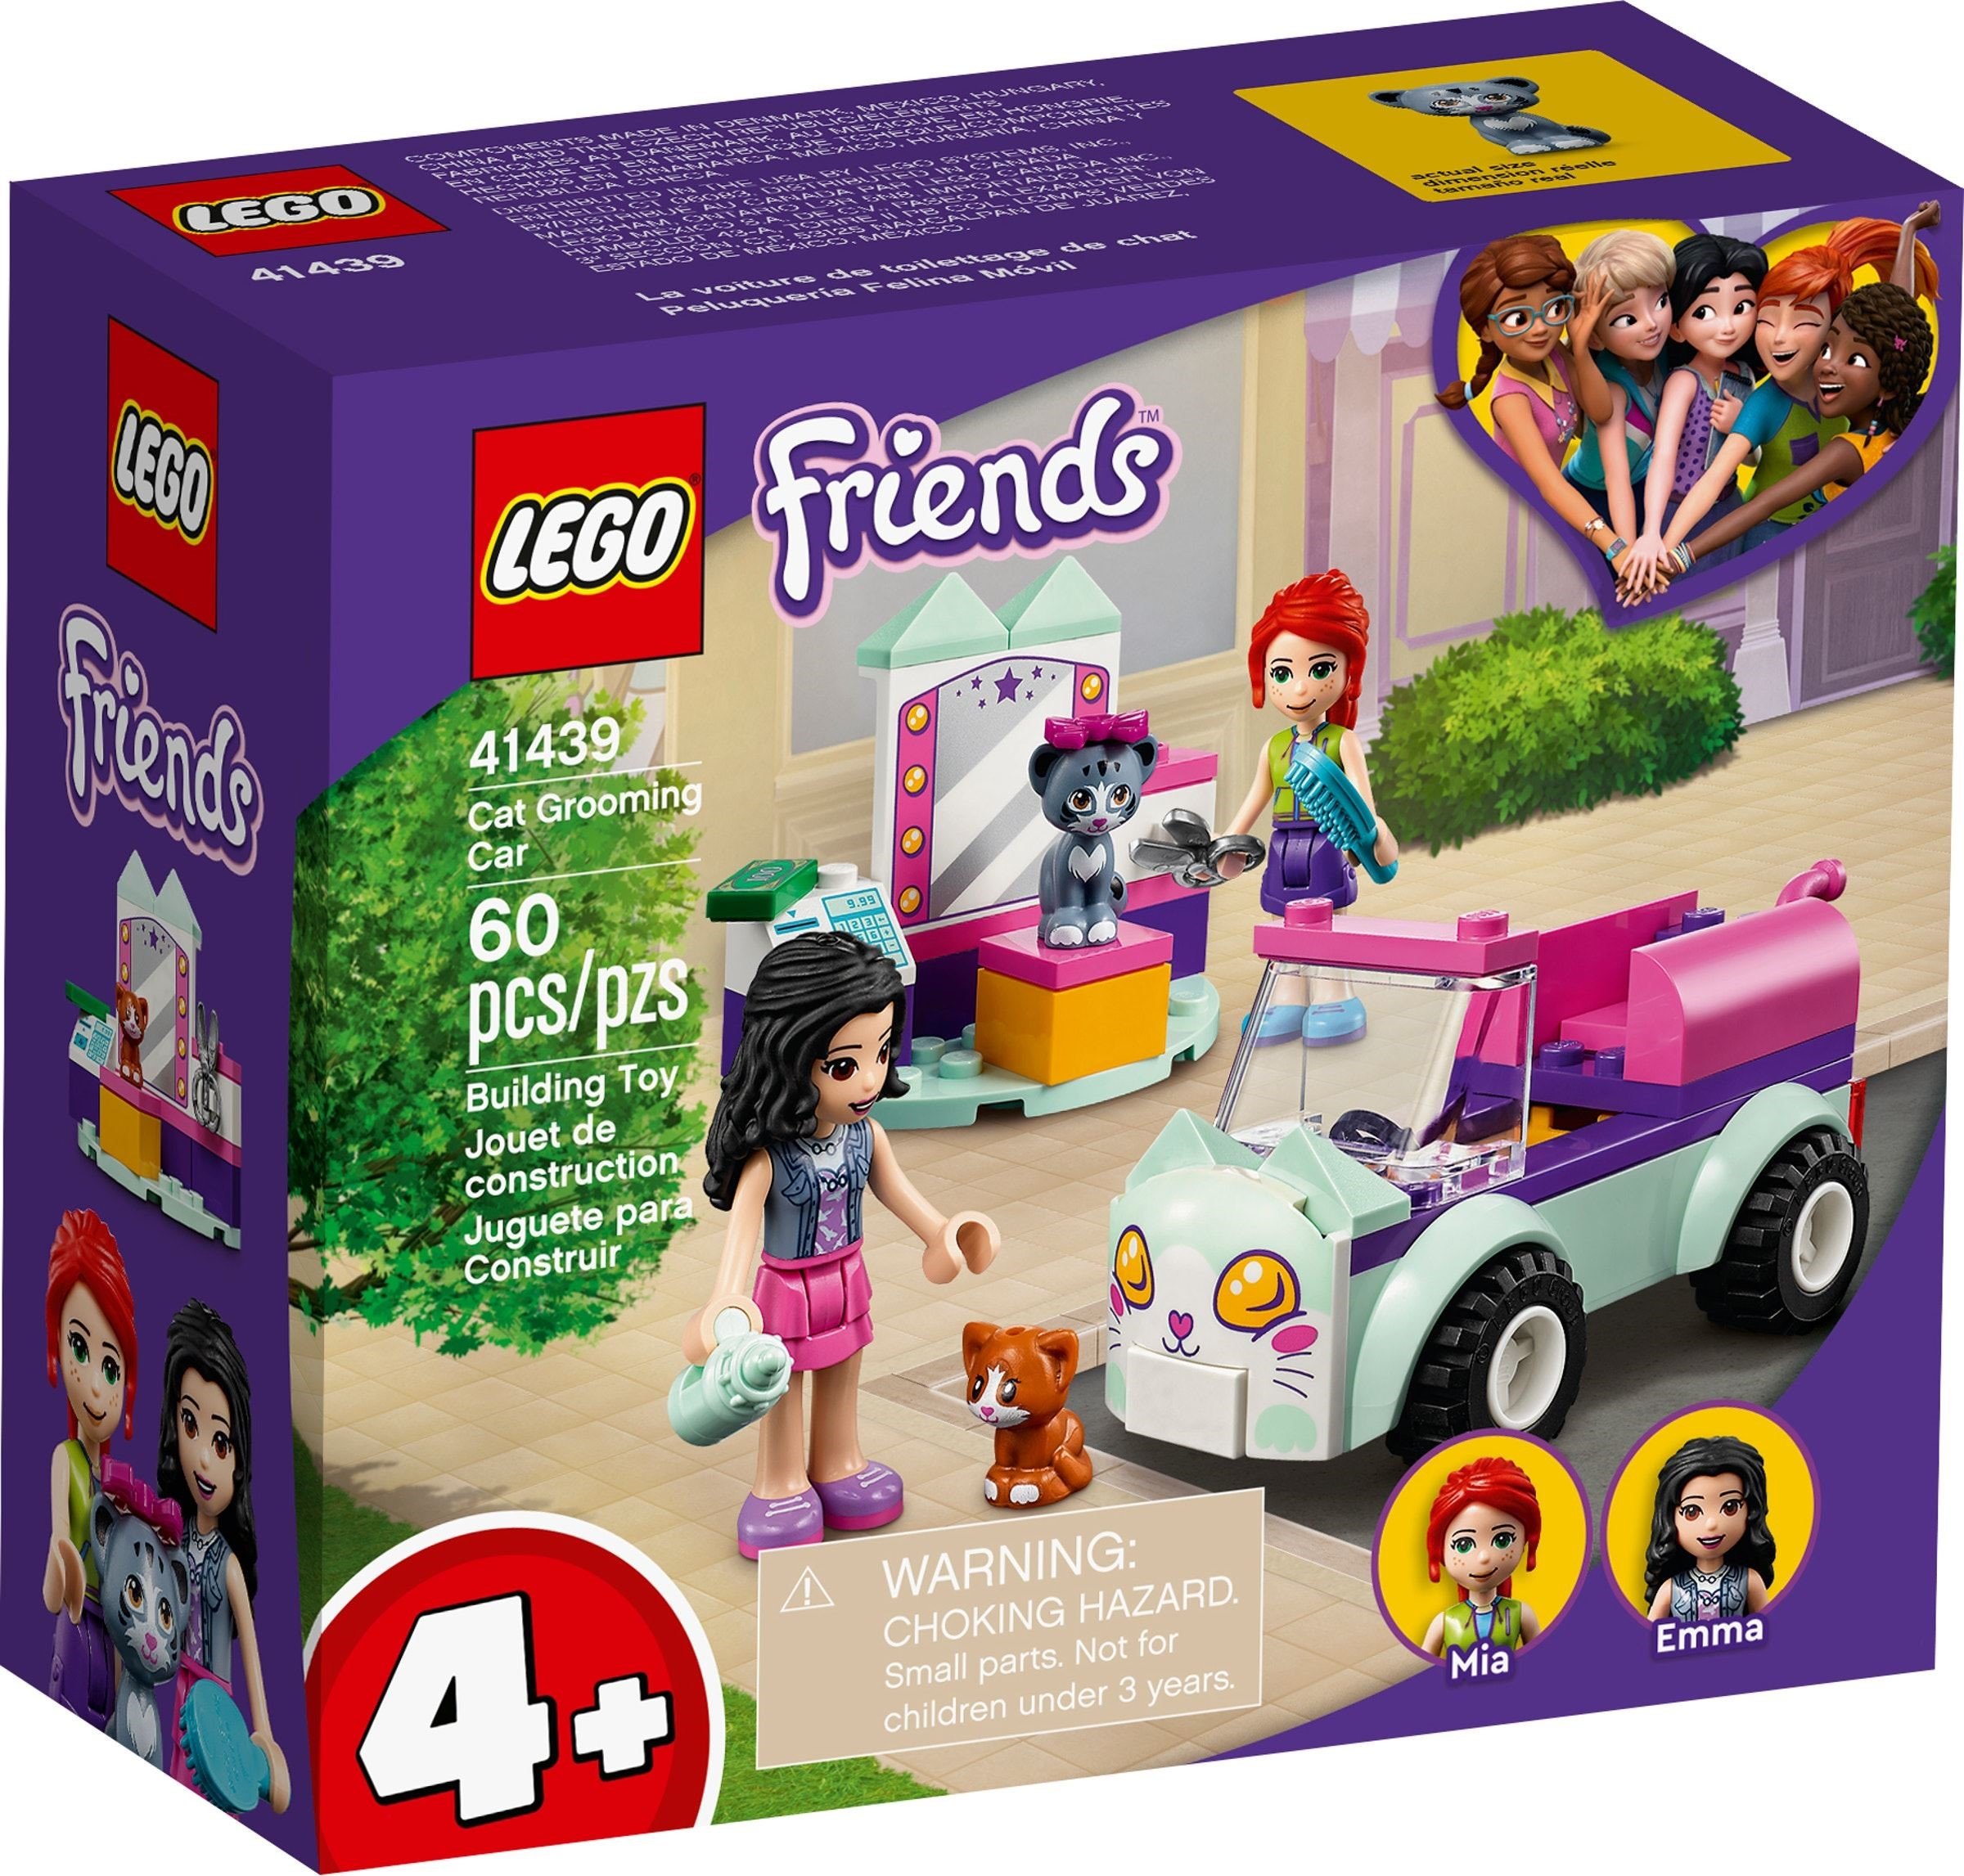 LEGO Friends - Cat Grooming Car (41439)